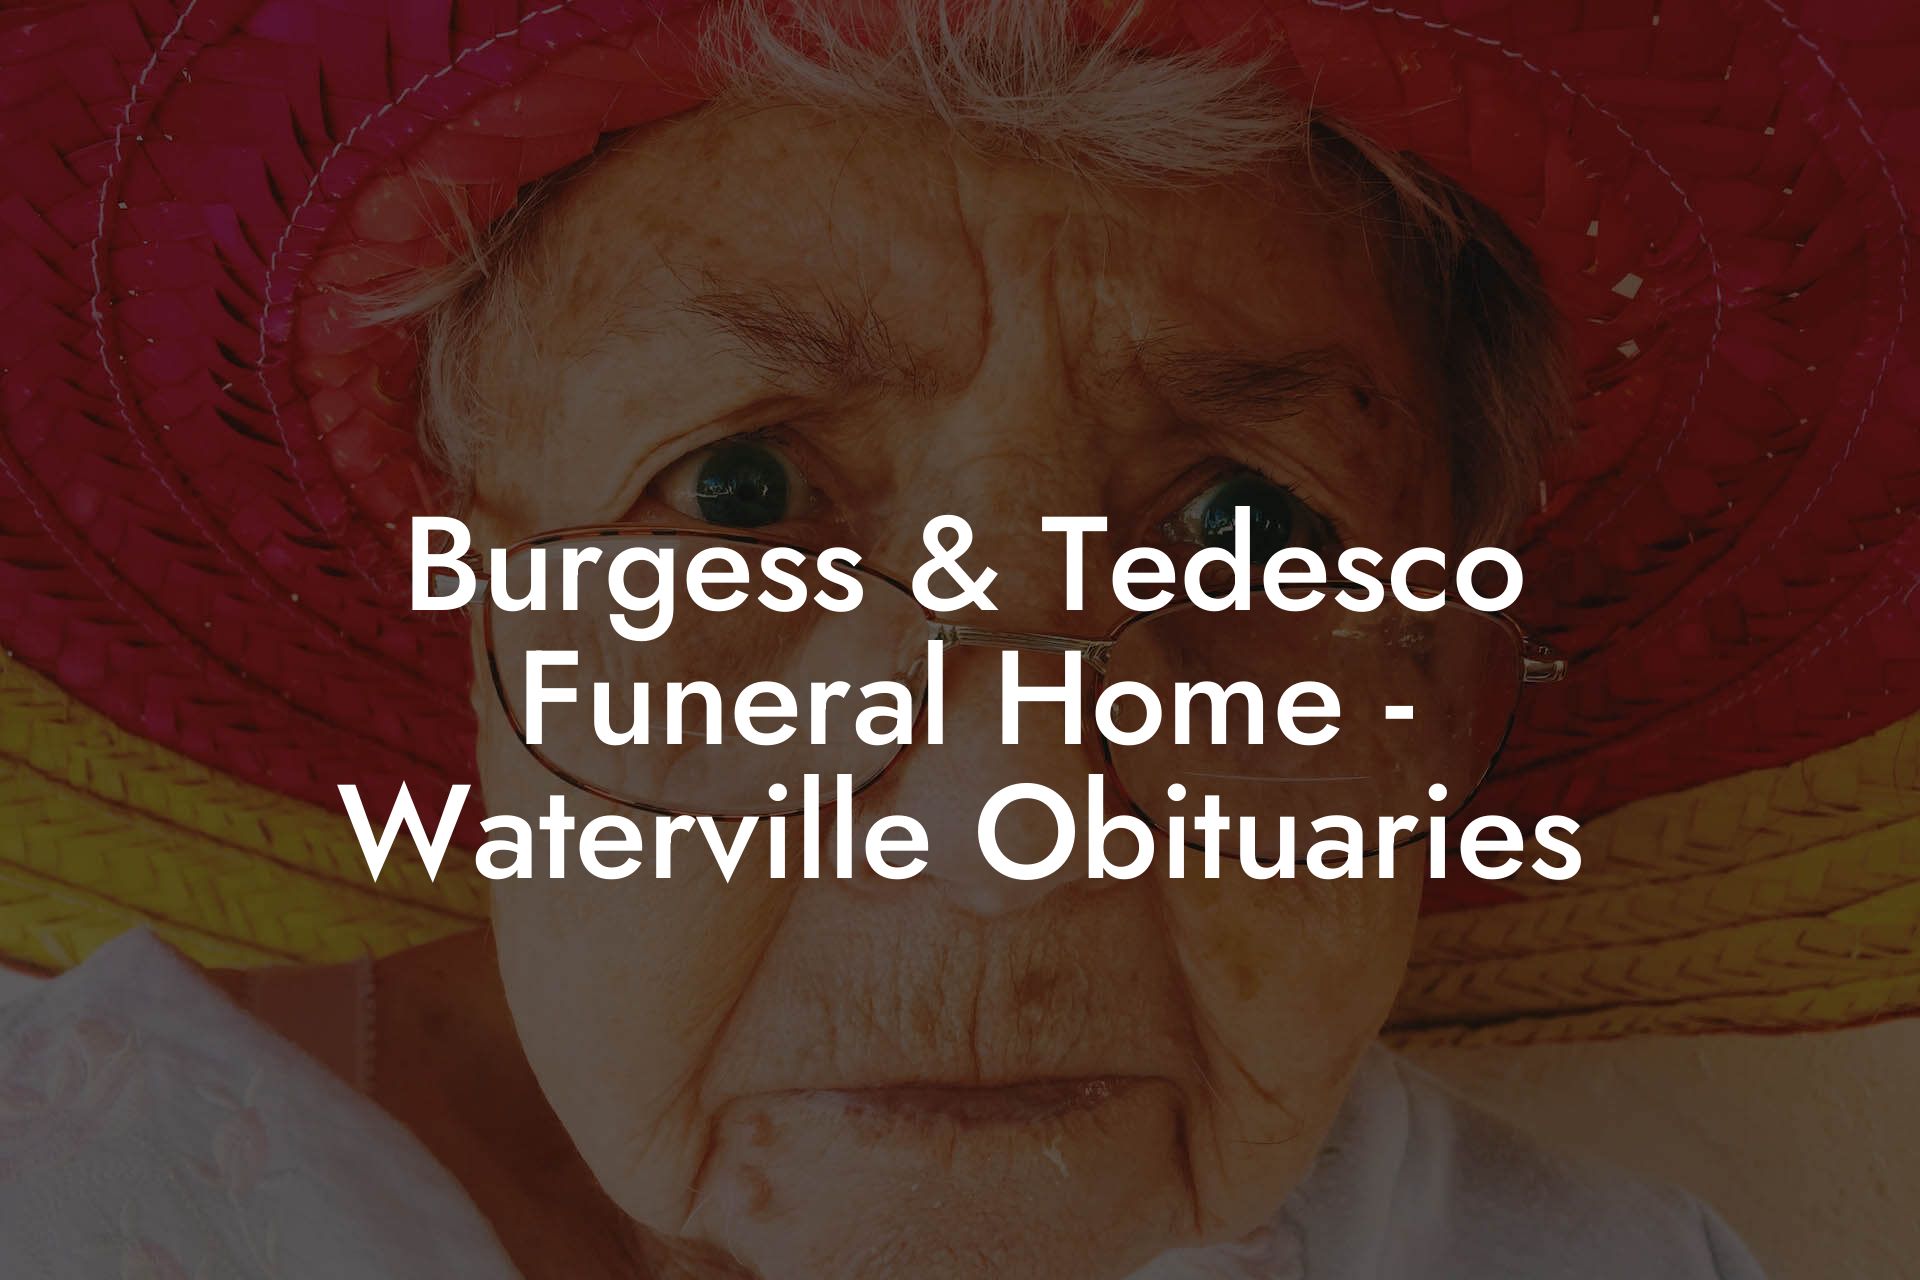 Burgess & Tedesco Funeral Home - Waterville Obituaries